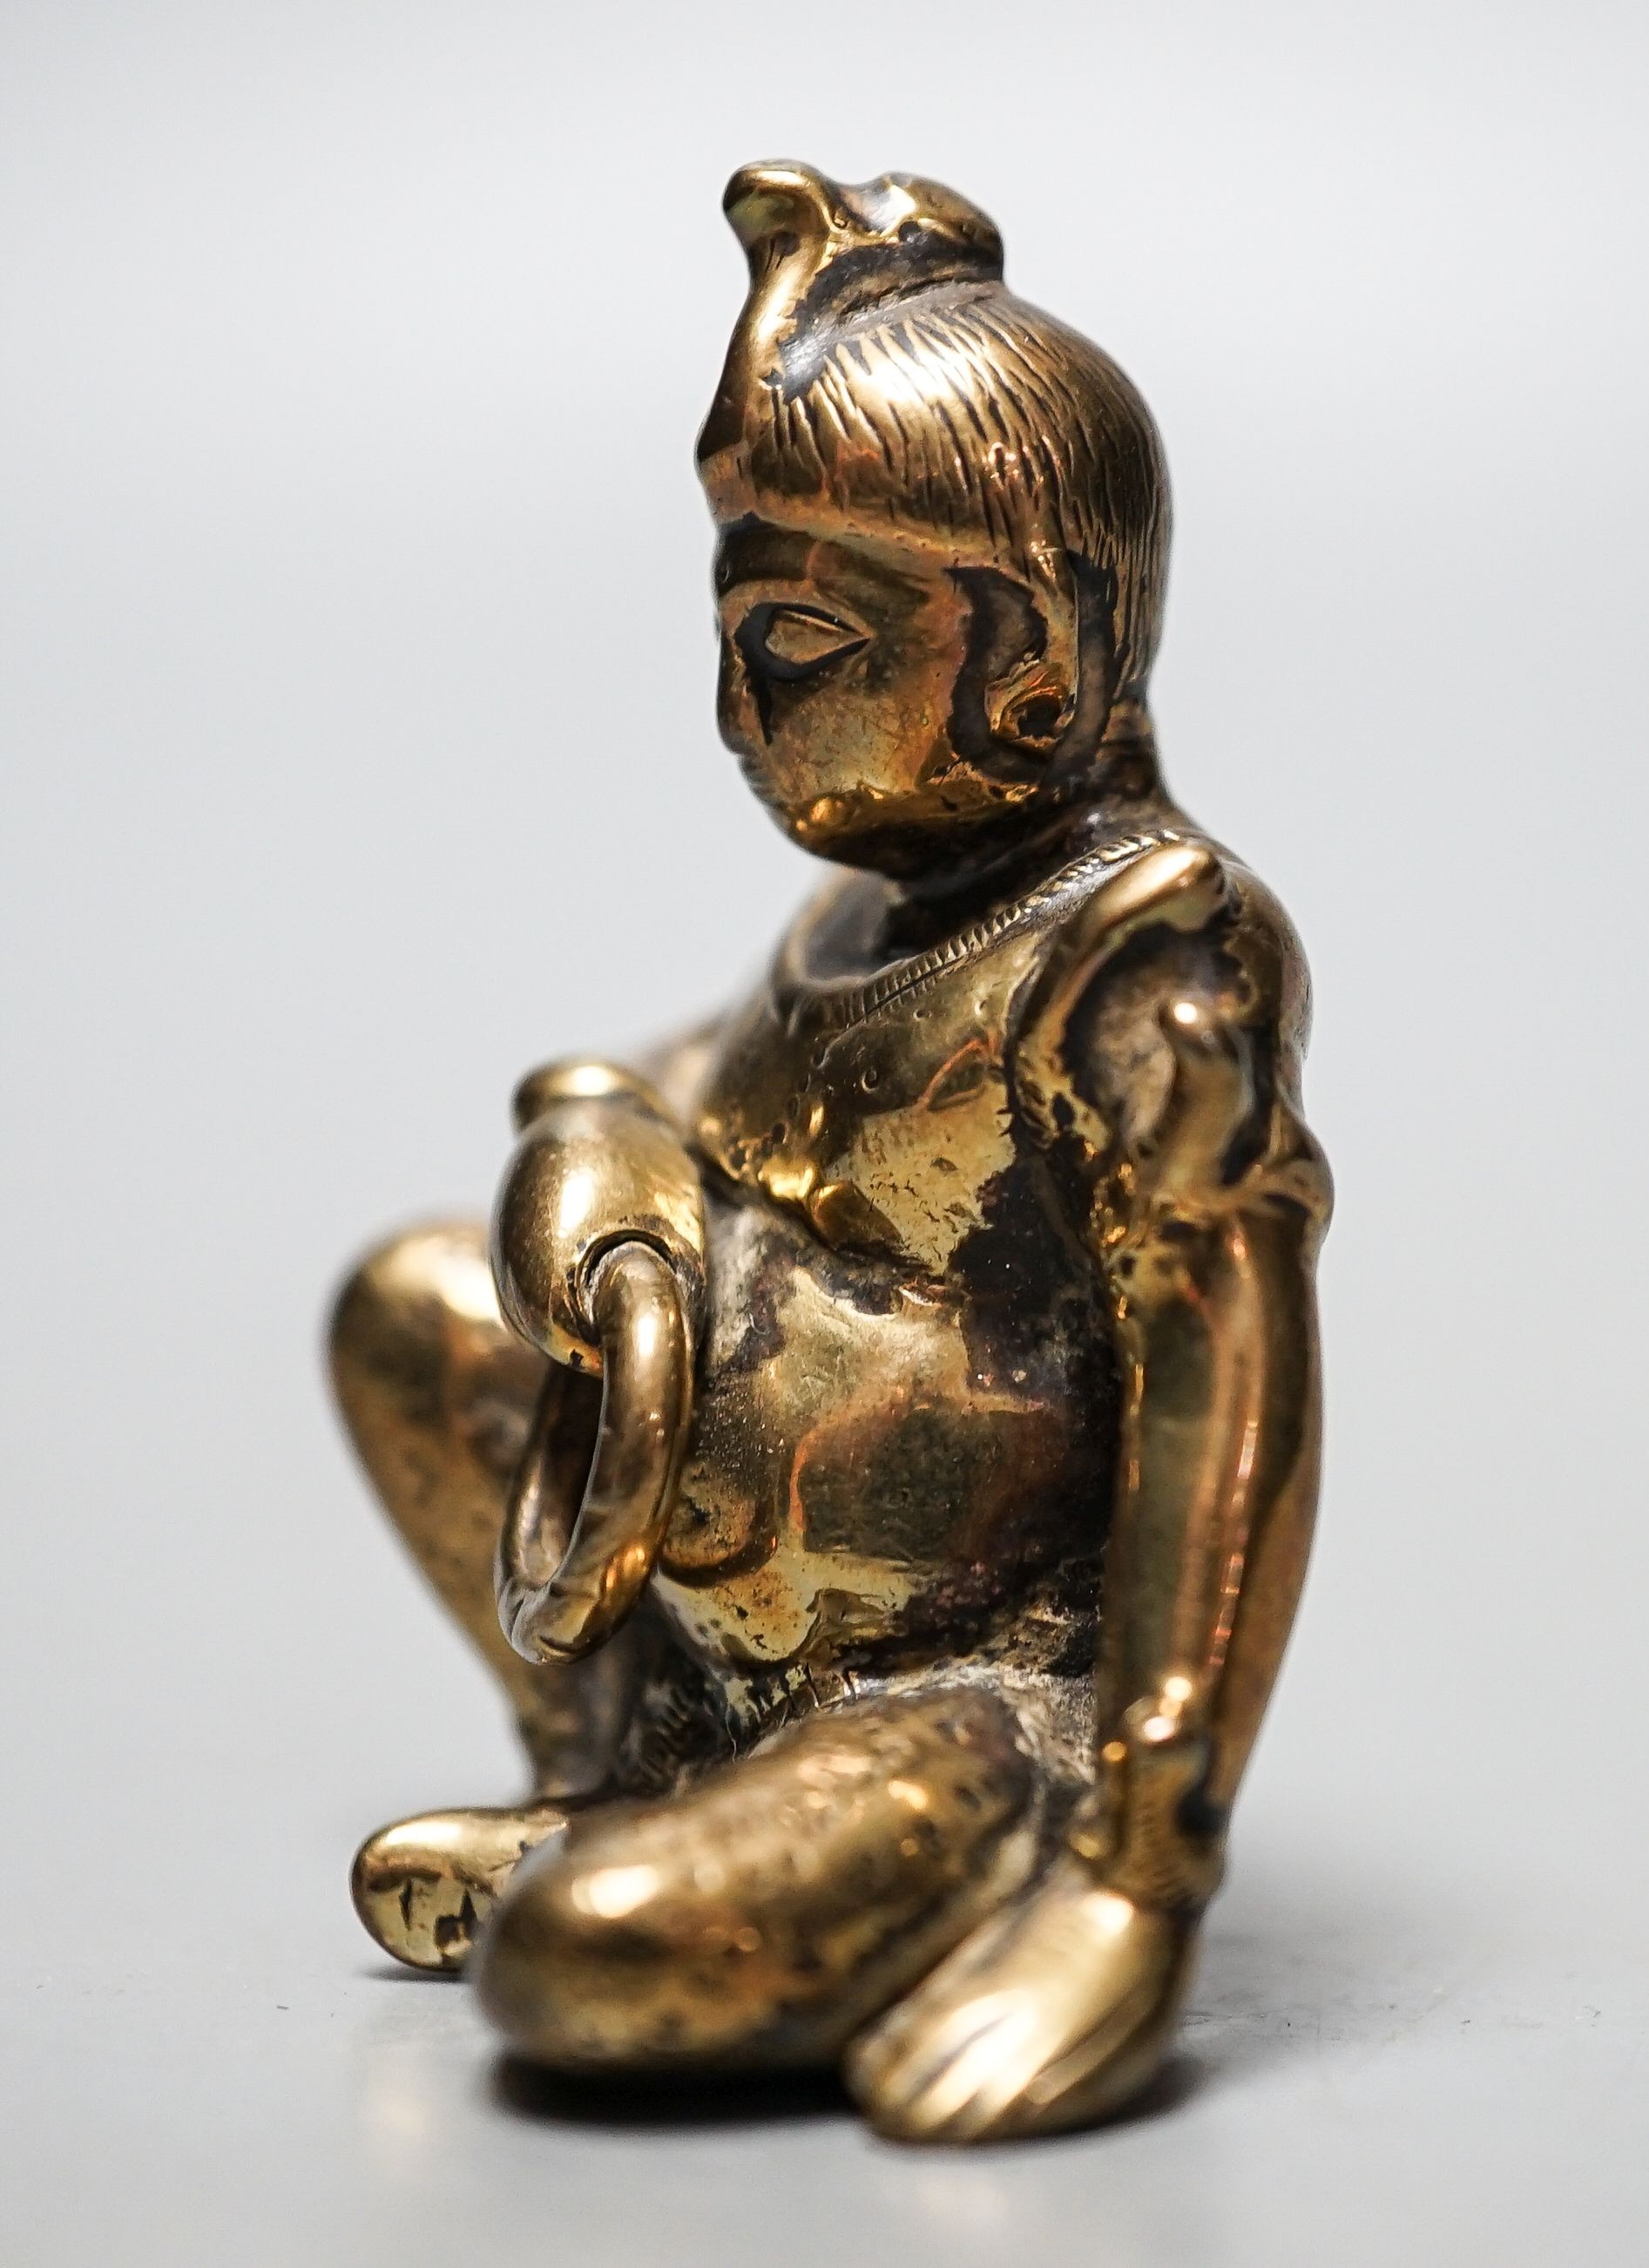 A 19th century bronze Buddhist seated figure 5.5cm